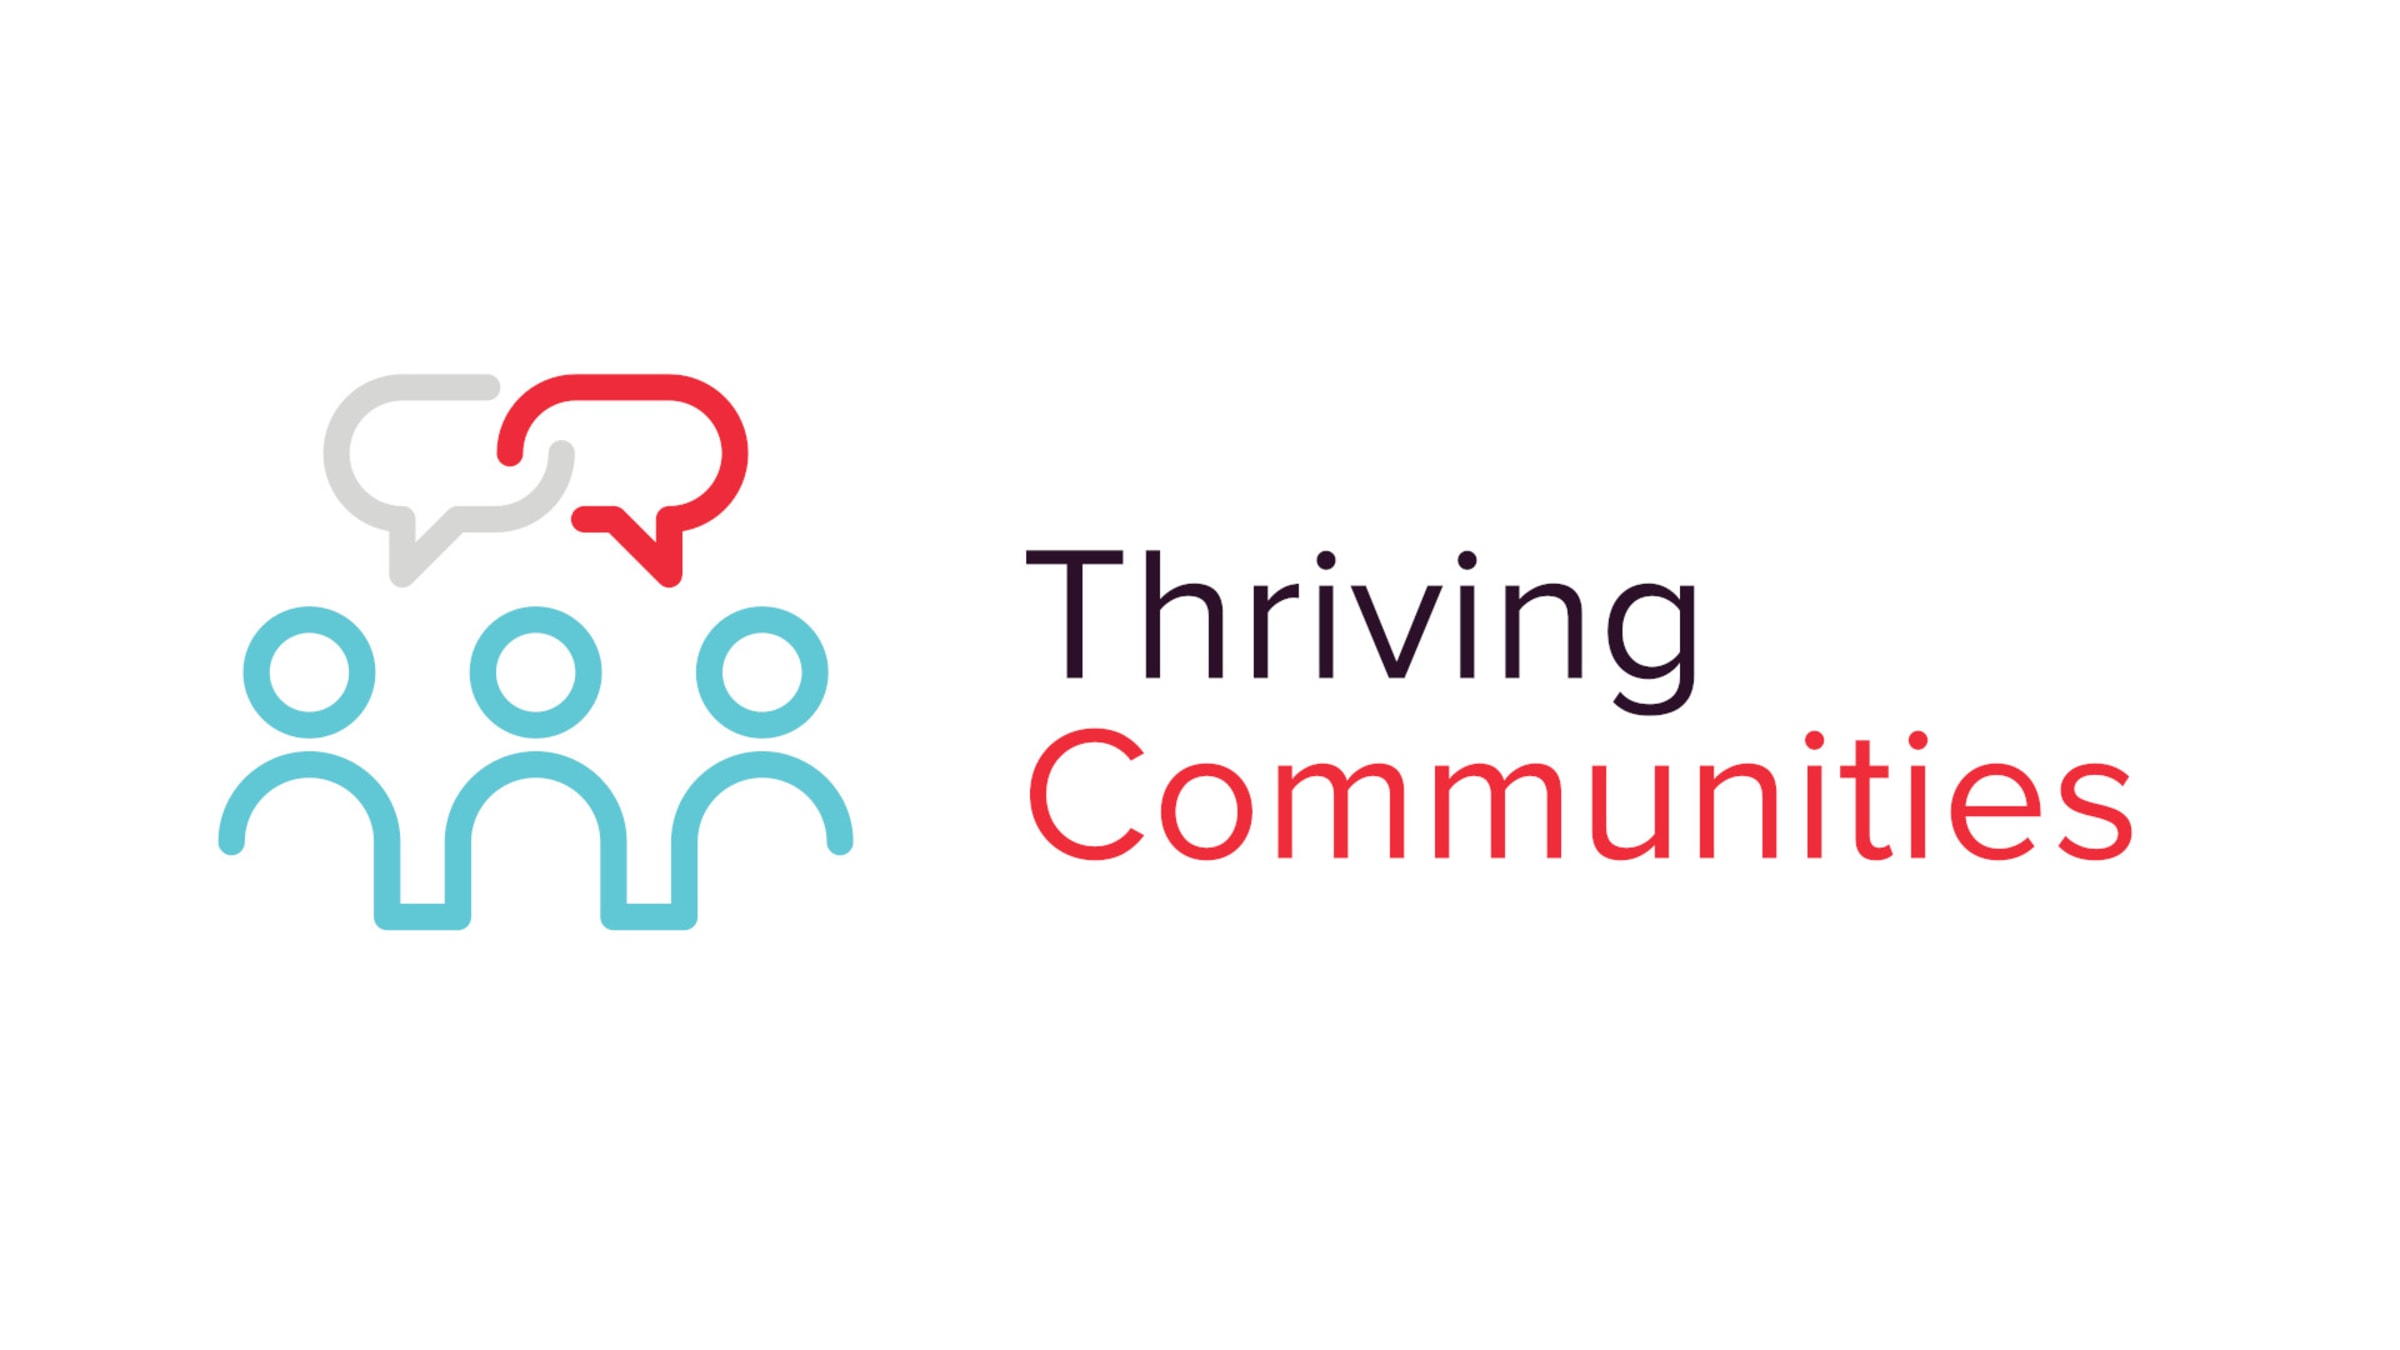 Benefits - Thriving Communities